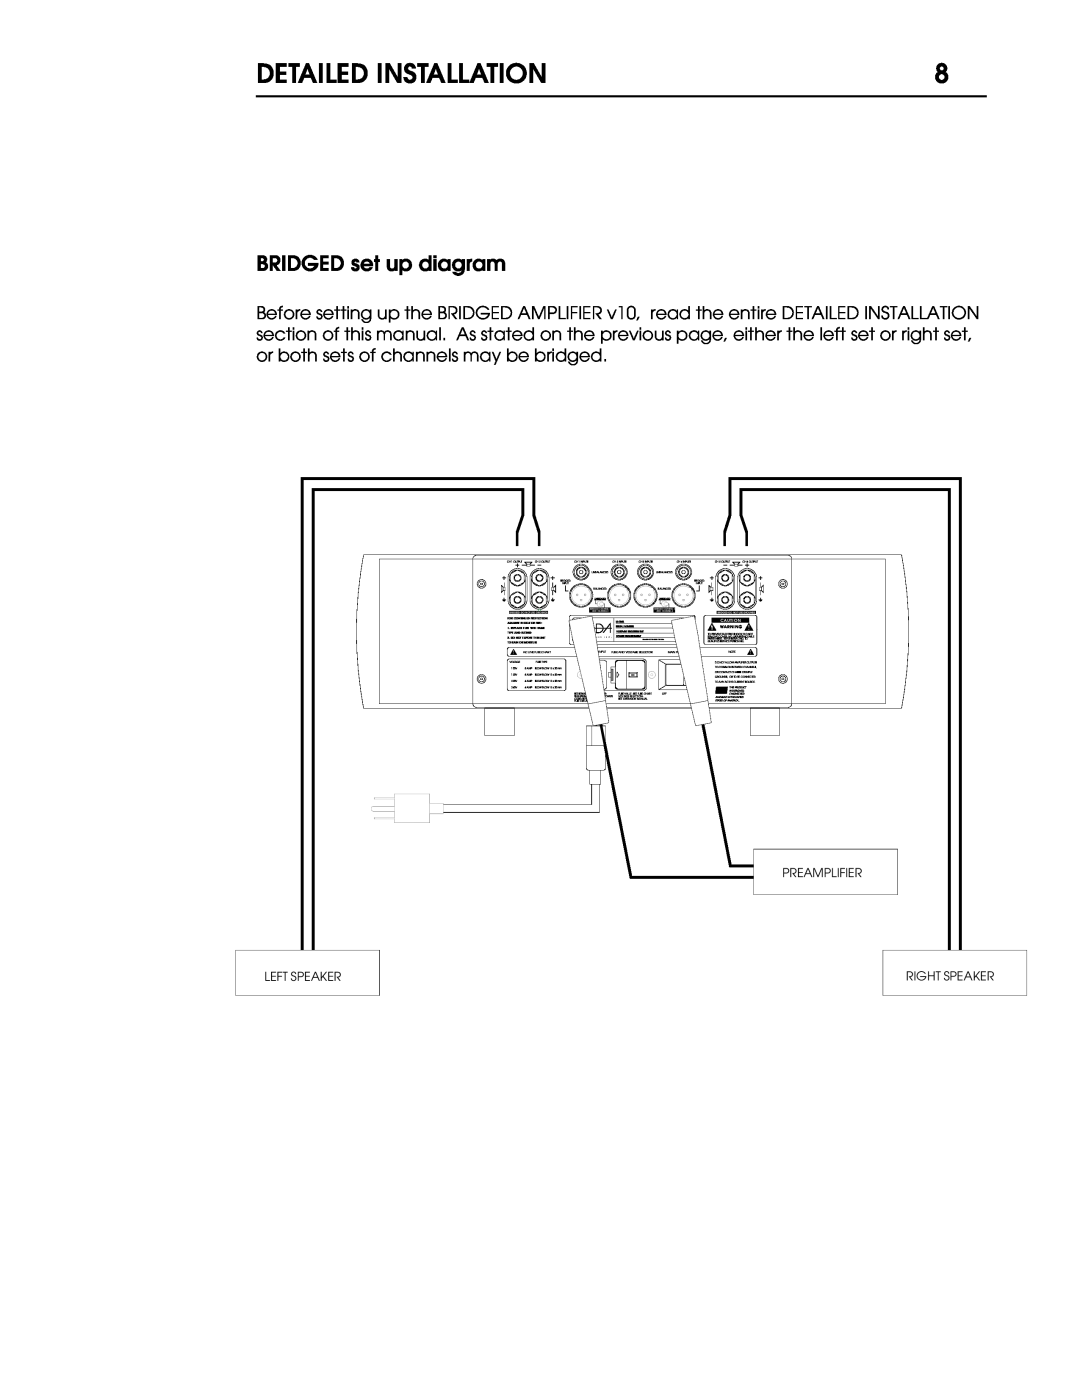 Coda V10 BRIDGED set up diagram, Left Speaker, Preamplifier Right Speaker, C A U Tion, Bridged-Donot Use Grounds 